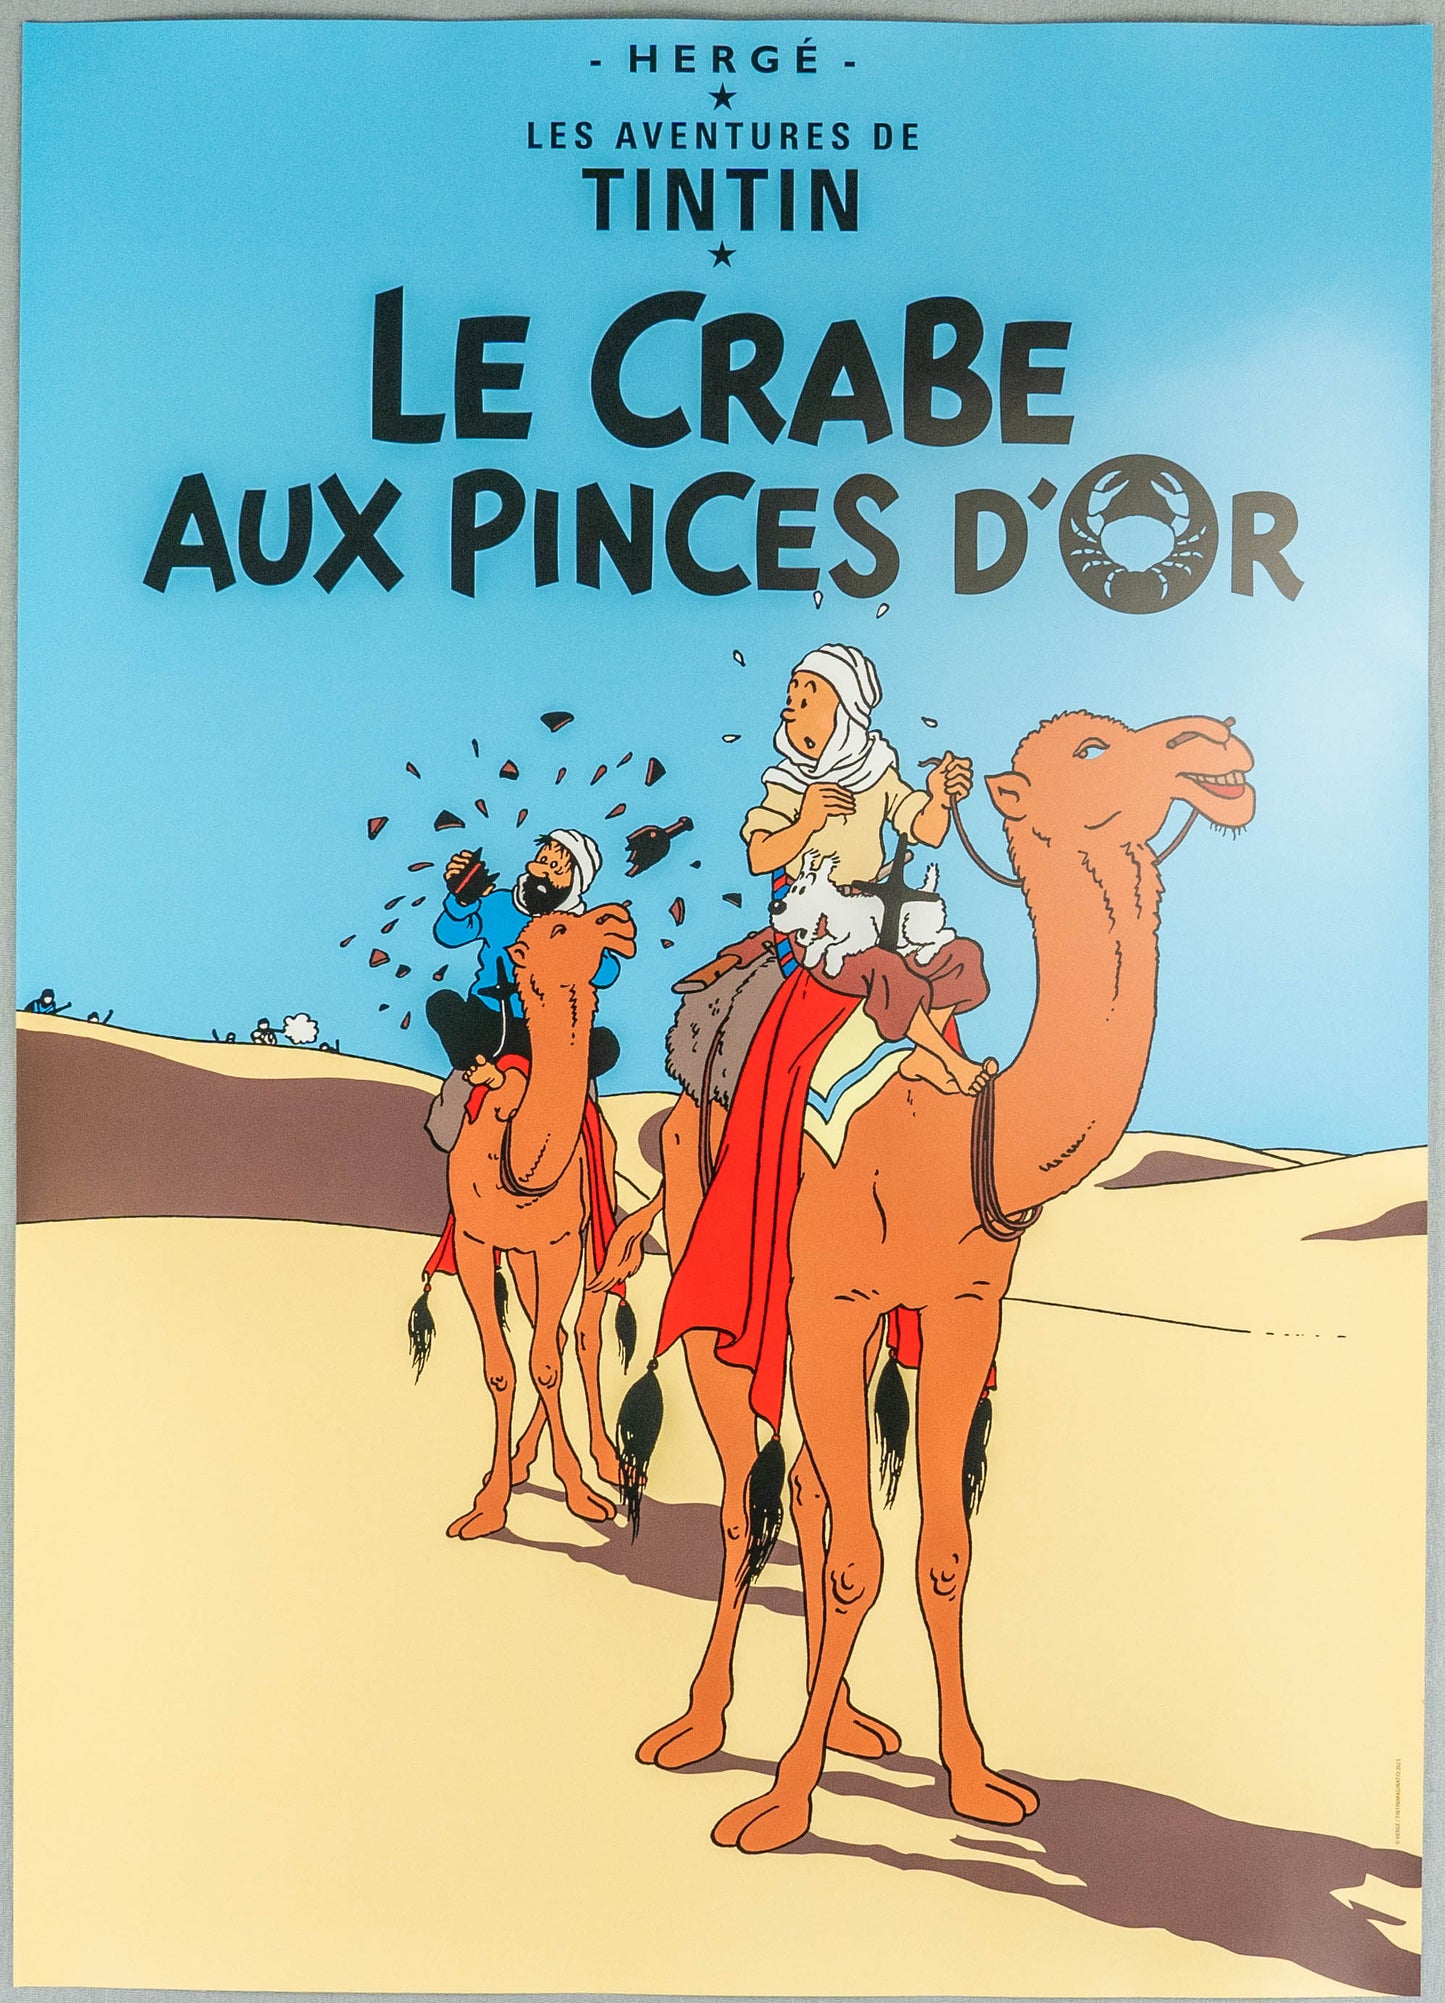 Le Crabe Aux Pinces D'or: Large Tintin Title Cover Poster by Moulinsart 50x70cm